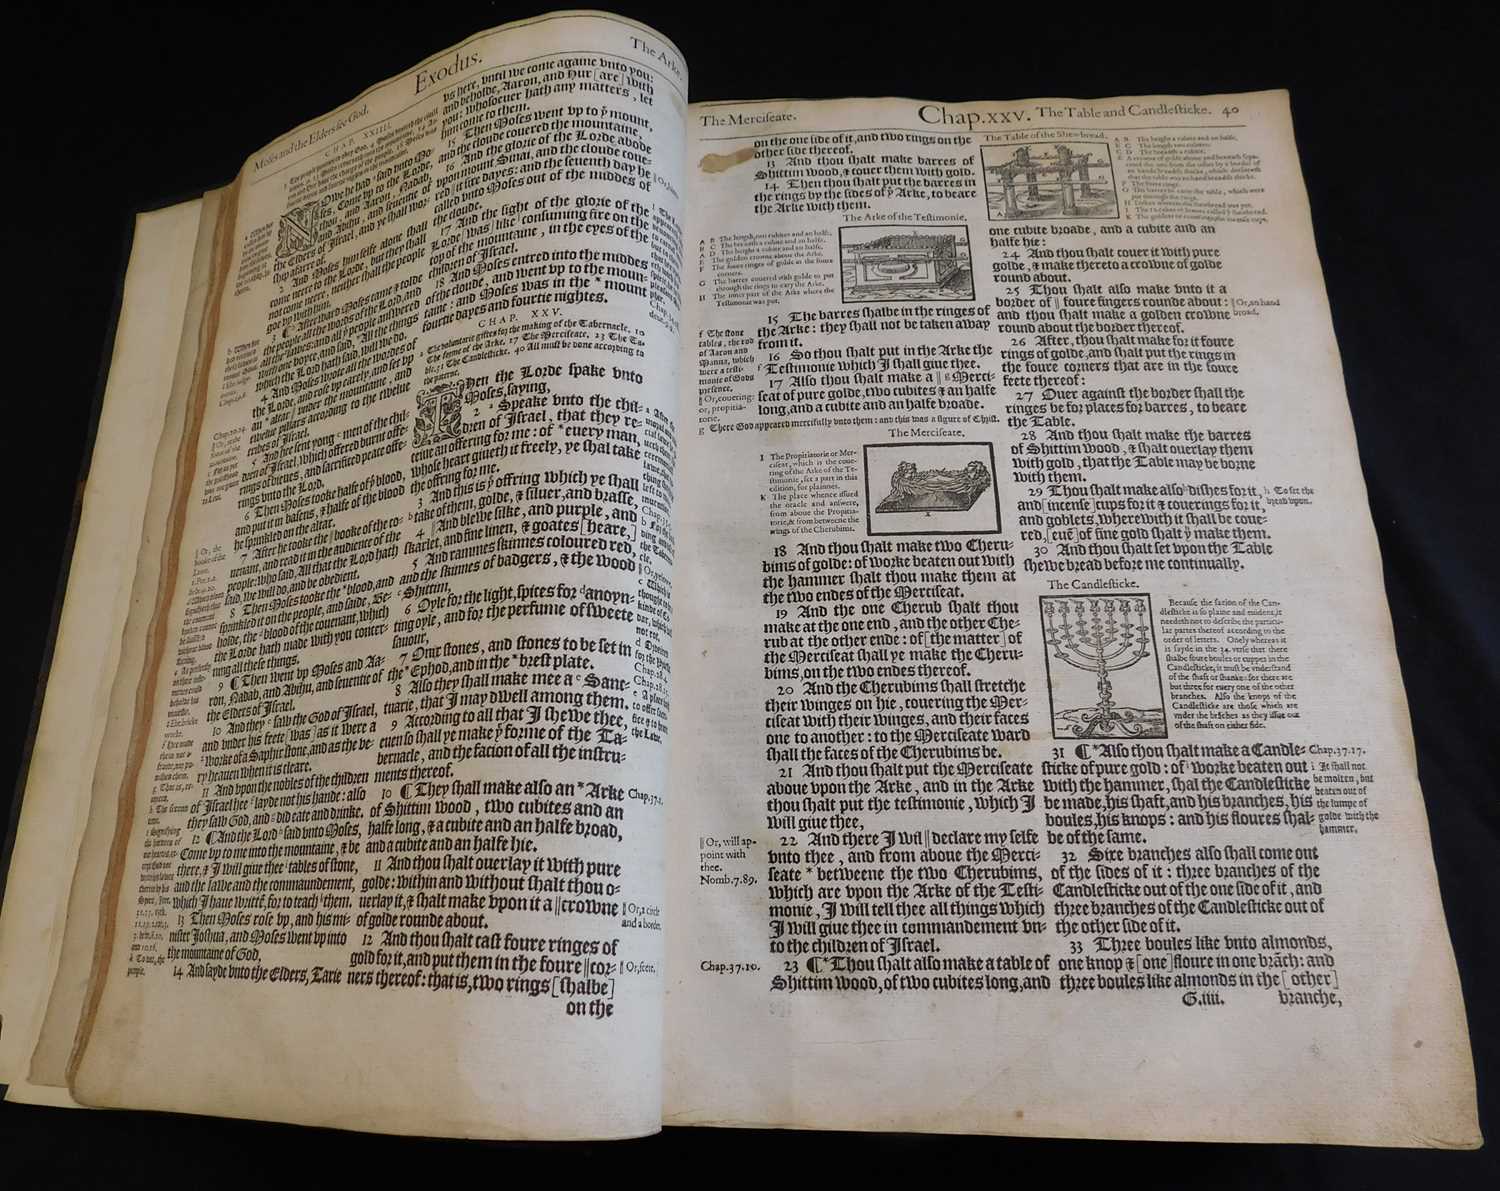 THE BIBLE..., London, Christopher Barker, 1583 Geneva version, black letter, lacks general title, - Image 4 of 6